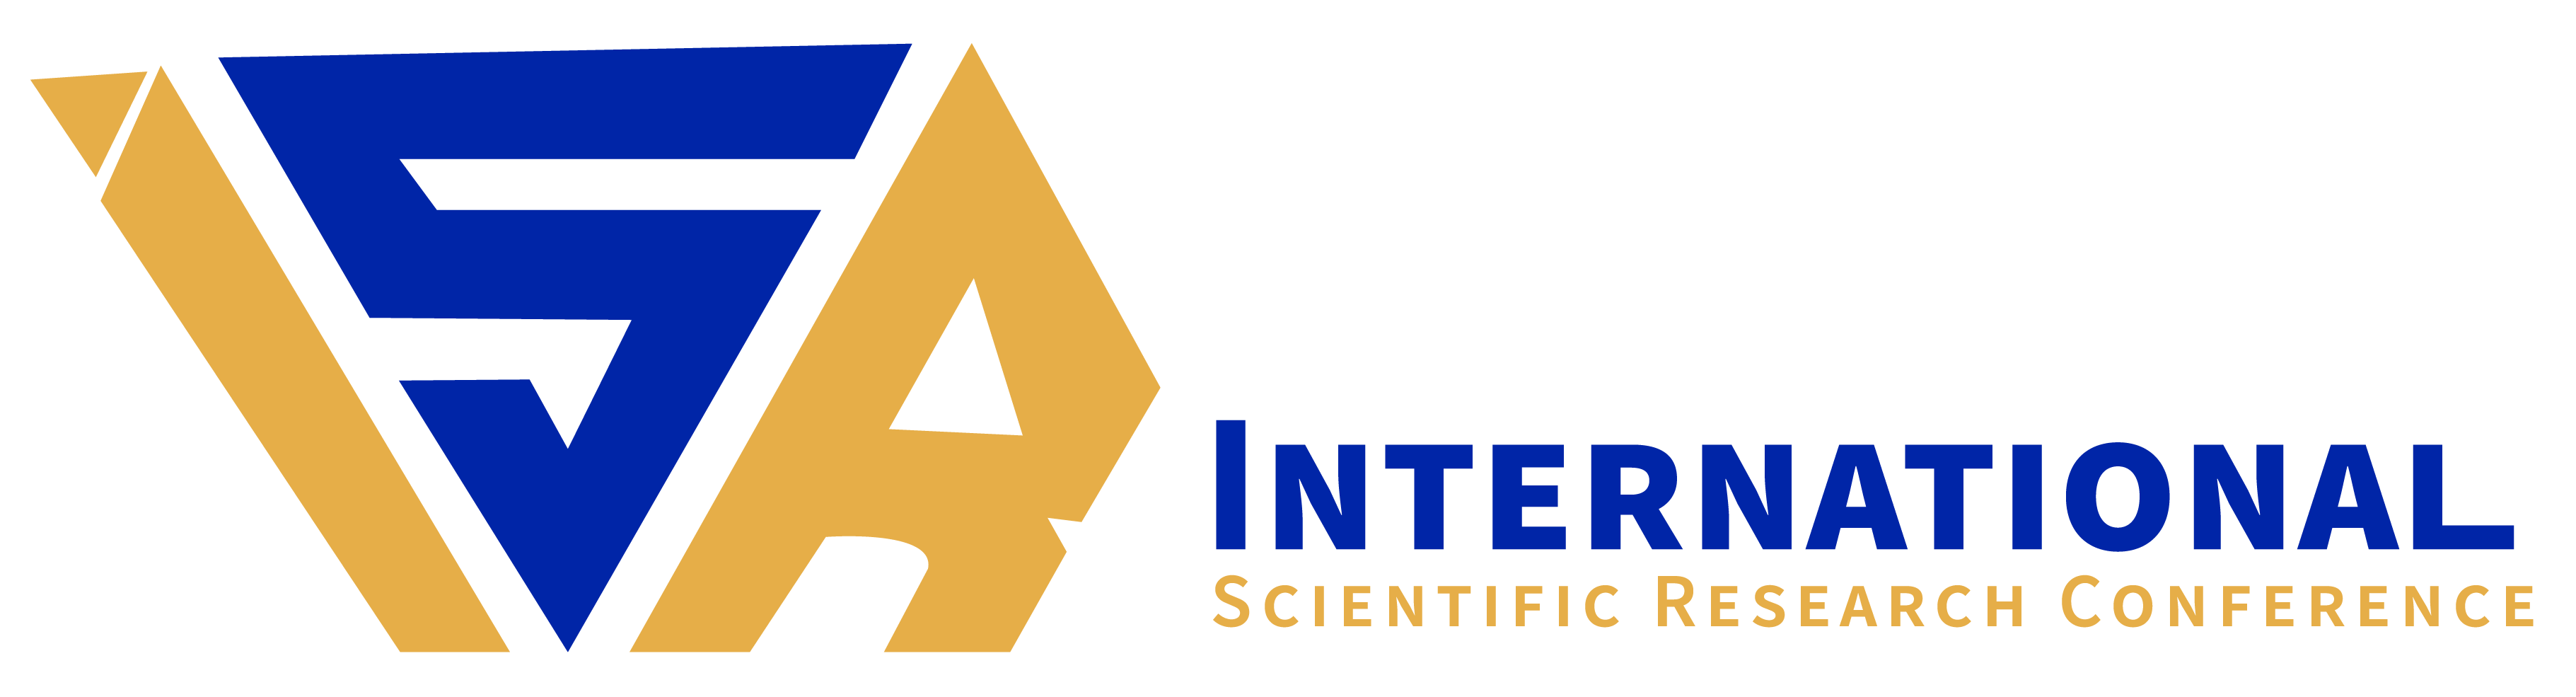 isrfinal logo2_isr